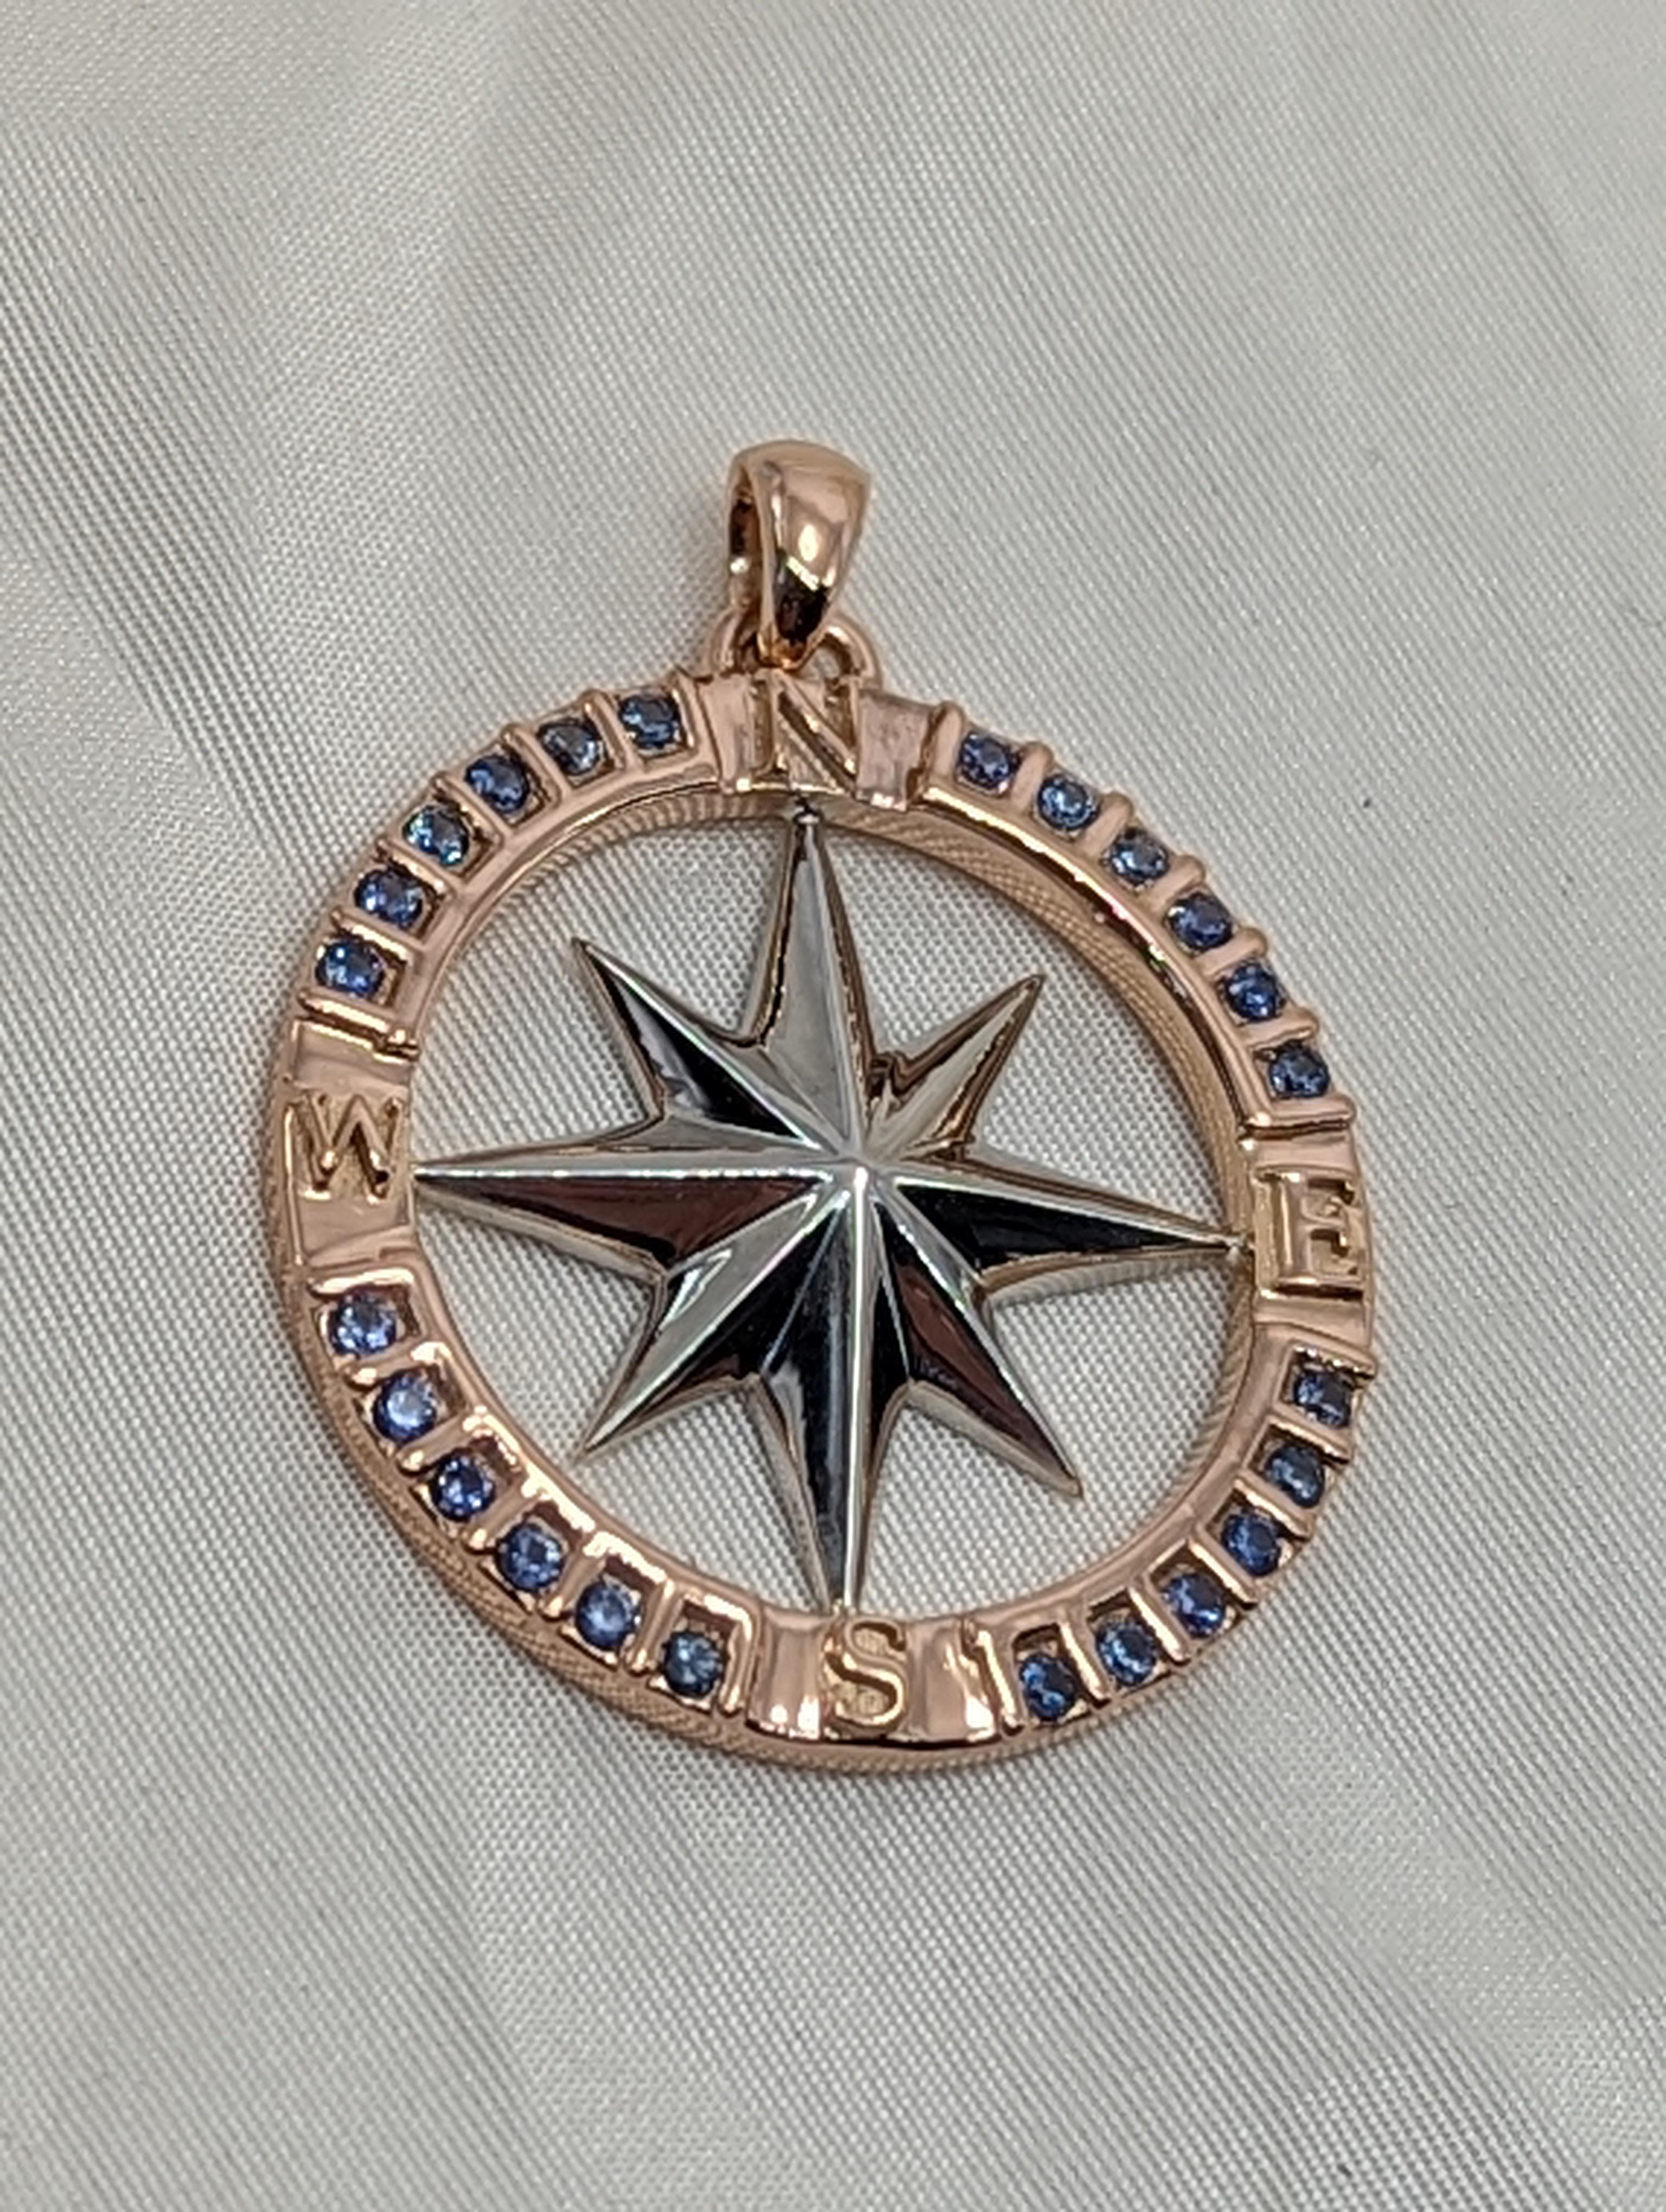 18k gold compass pendant